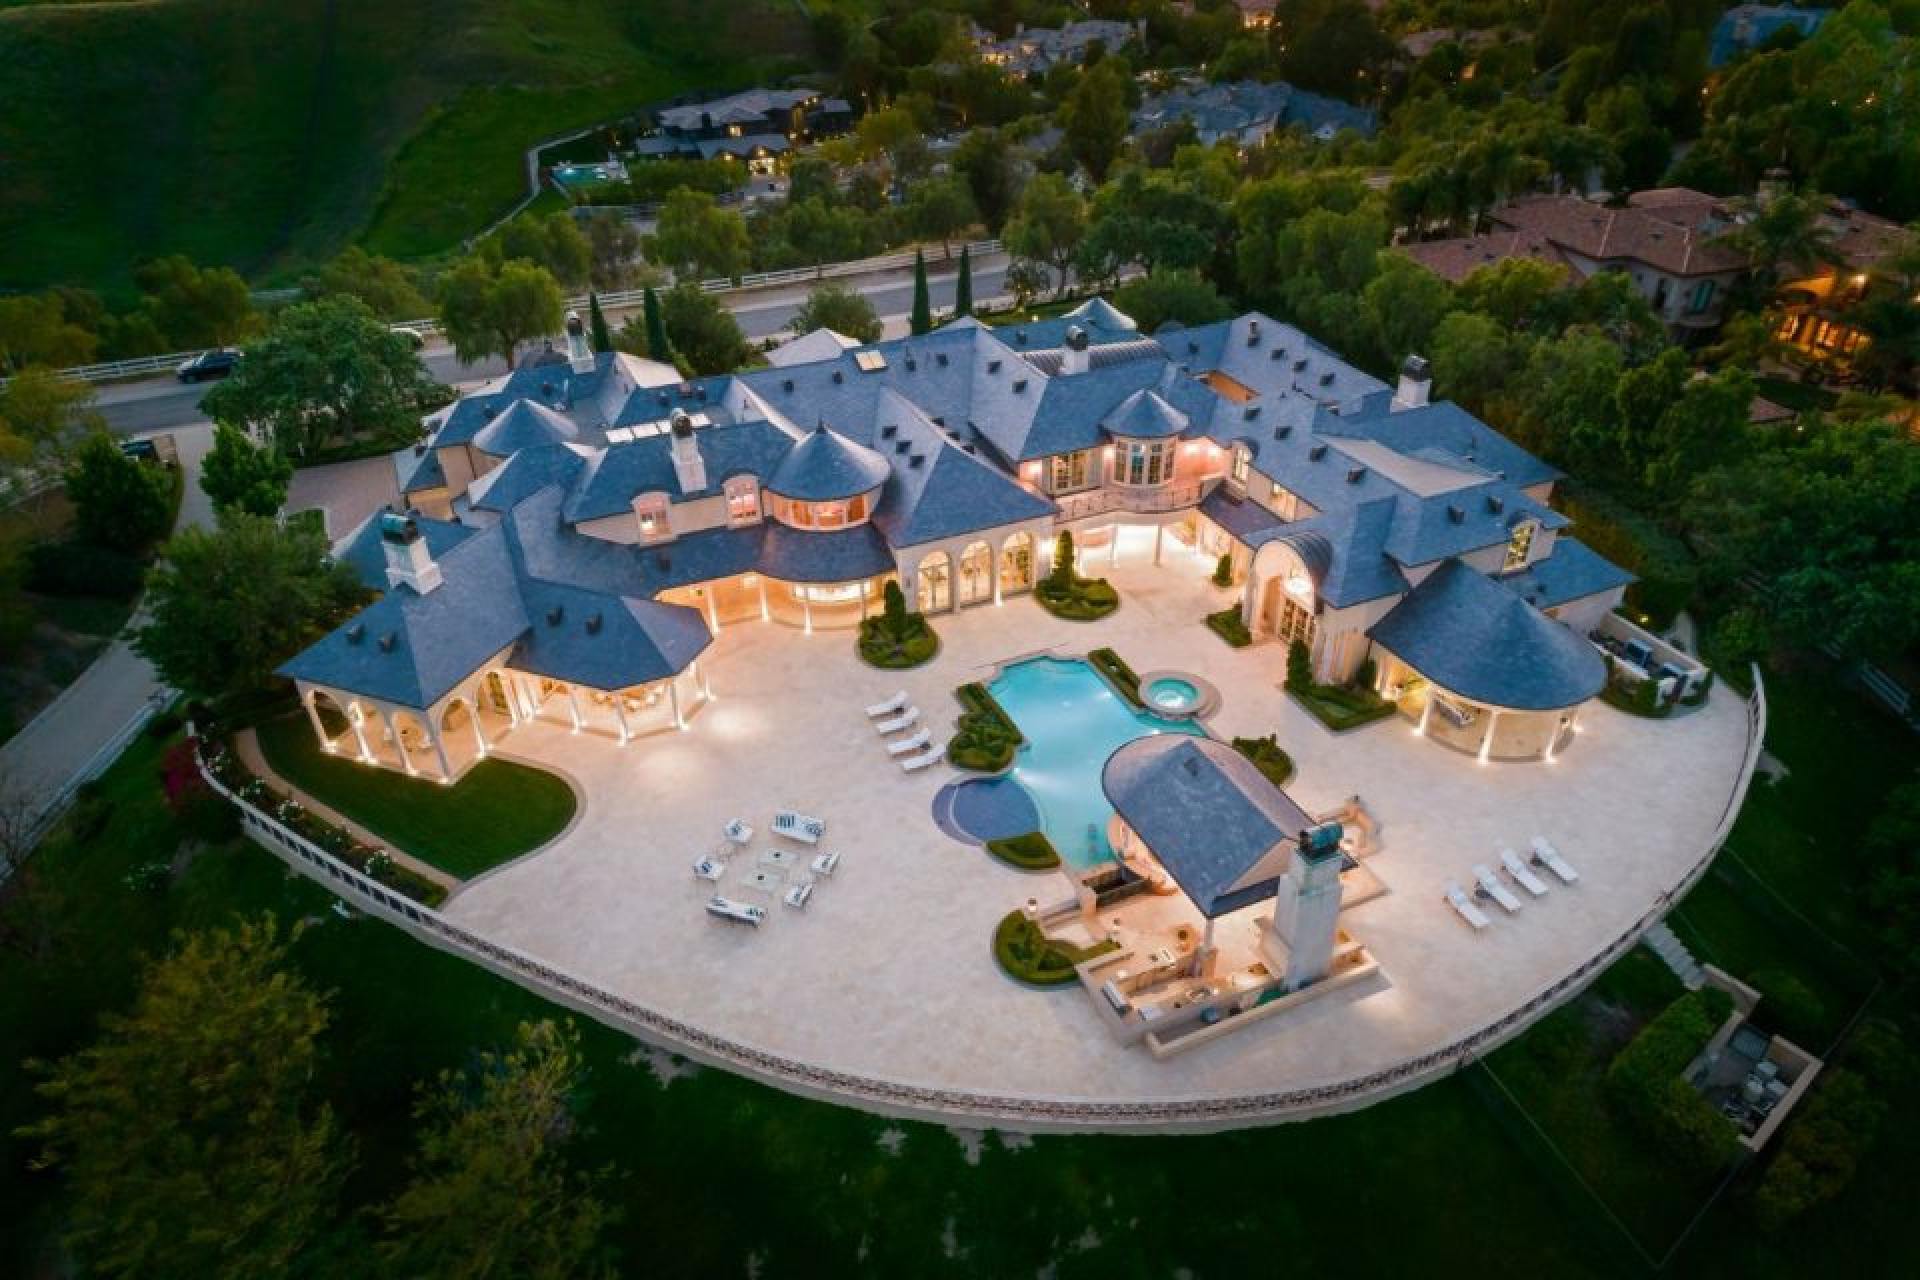 Jeffree Star Lists His Hidden Hills Mansion For $20 Million: Pics